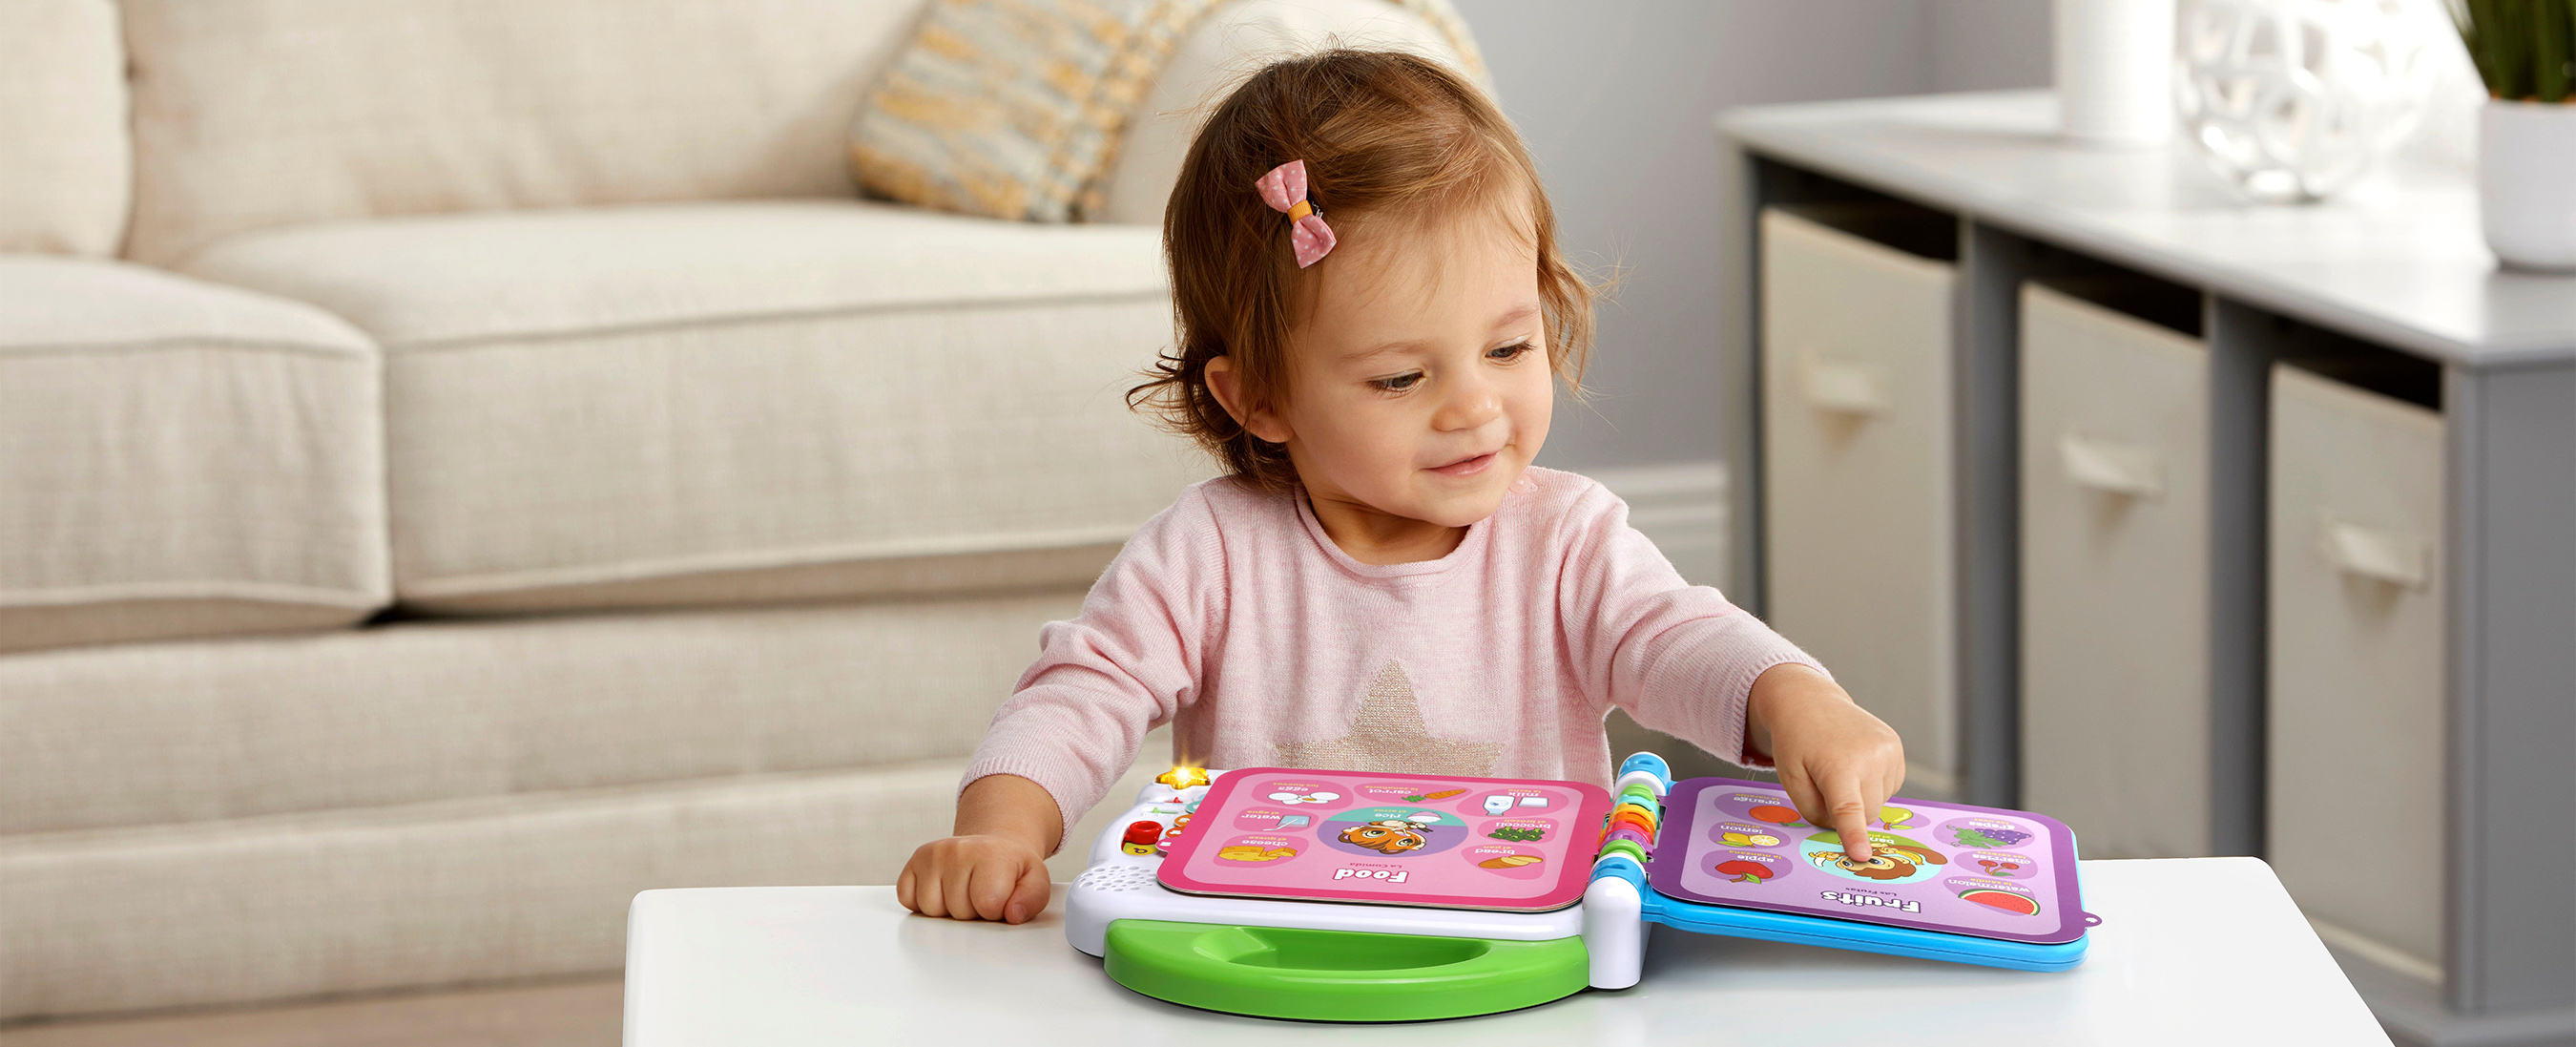 leapfrog educational toys for toddlers